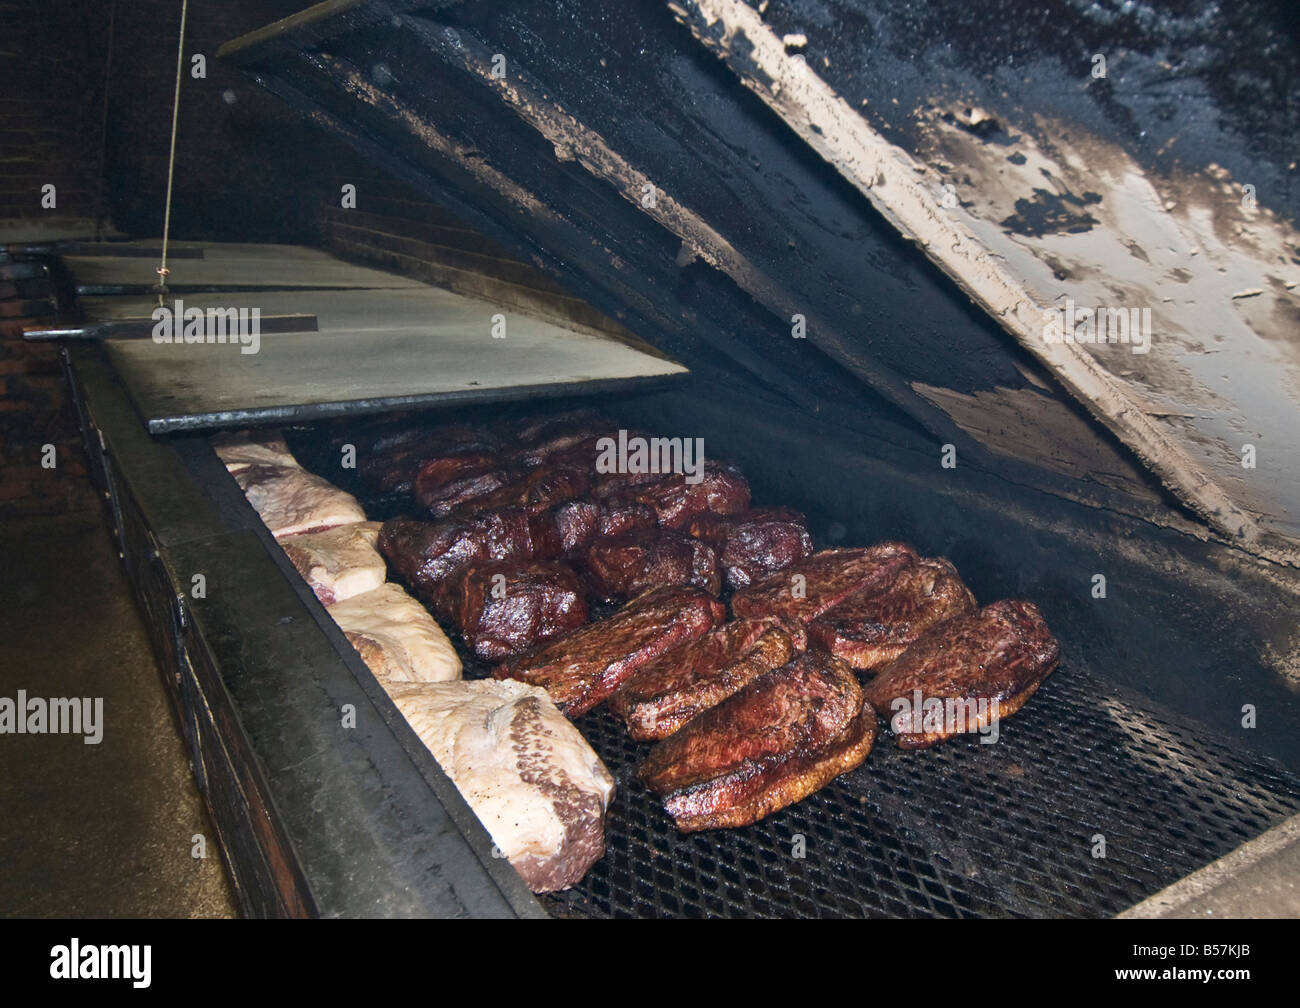 Texas Lockhart Smitty s viande fumée de barbecue de marché de poitrine de  boeuf restaurant fumeur four Photo Stock - Alamy